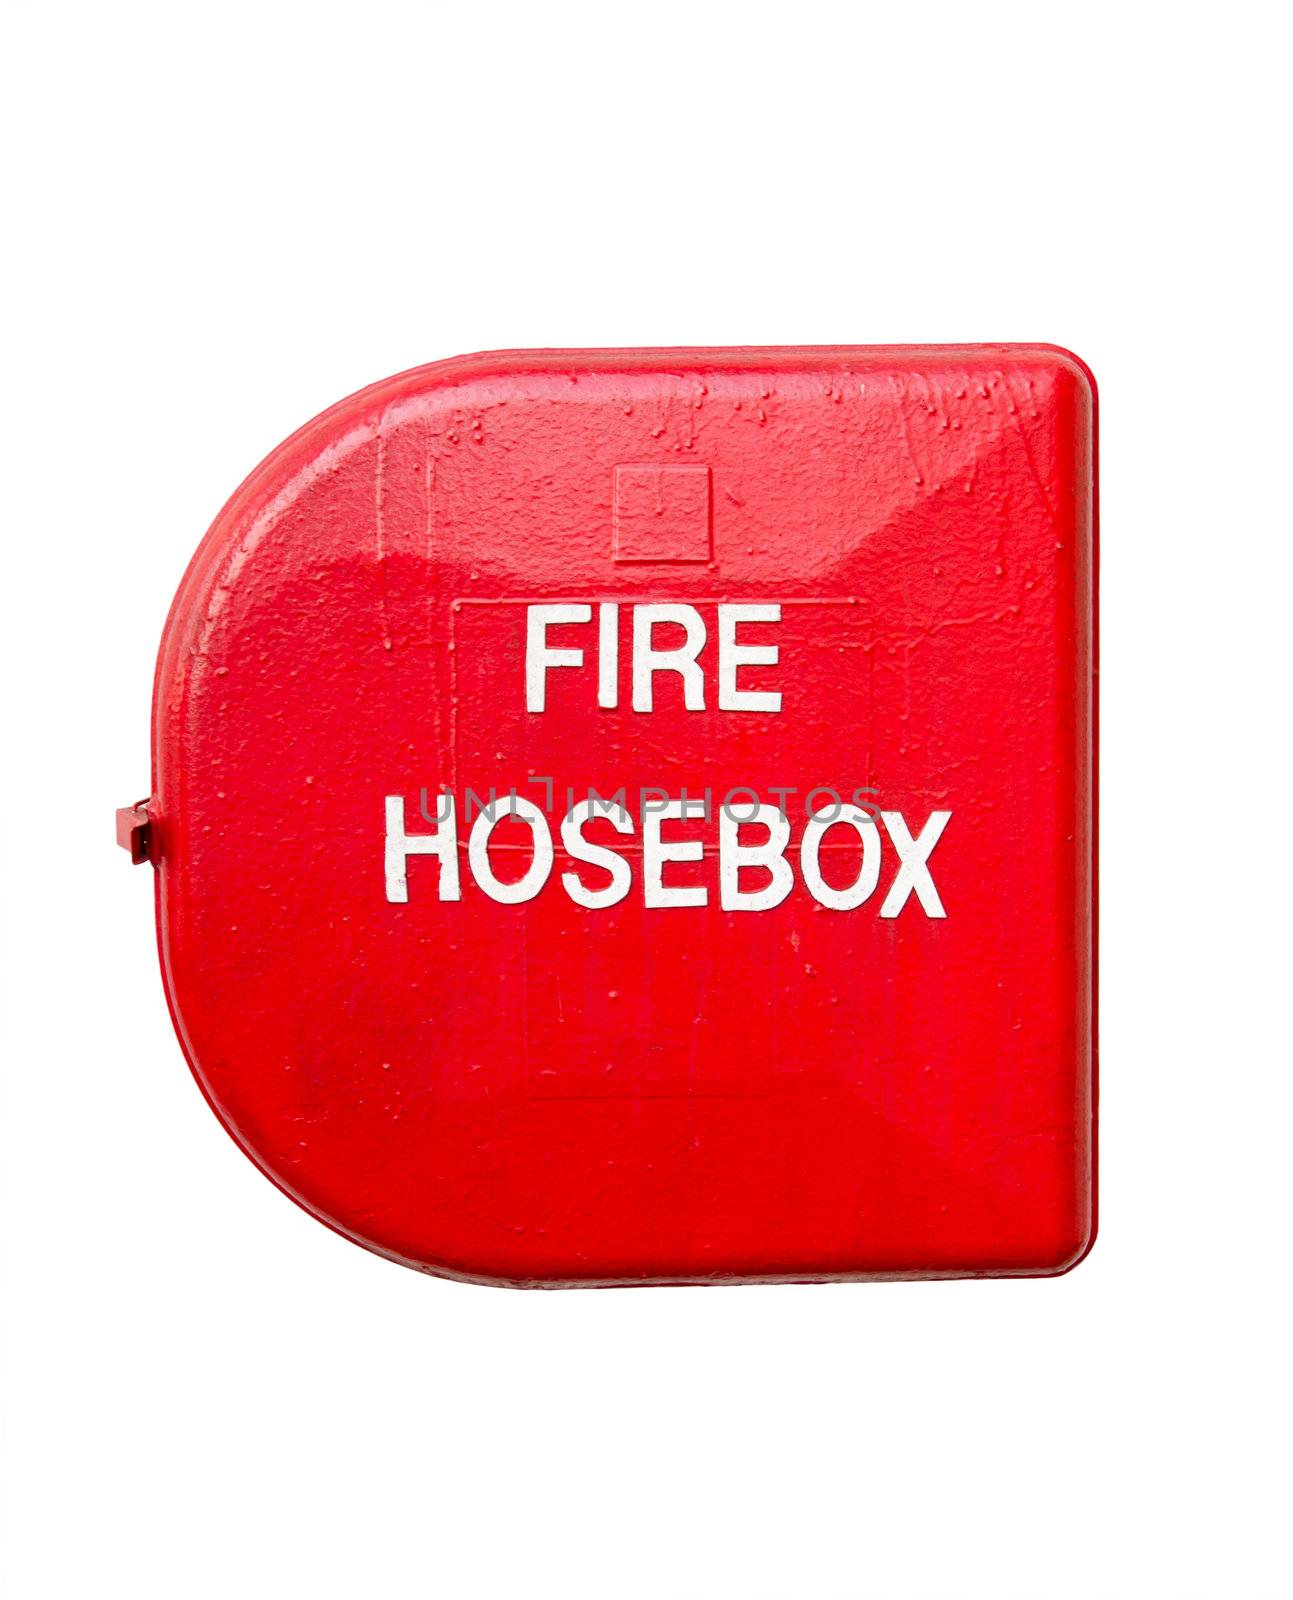 red fire hosebox by boydz1980